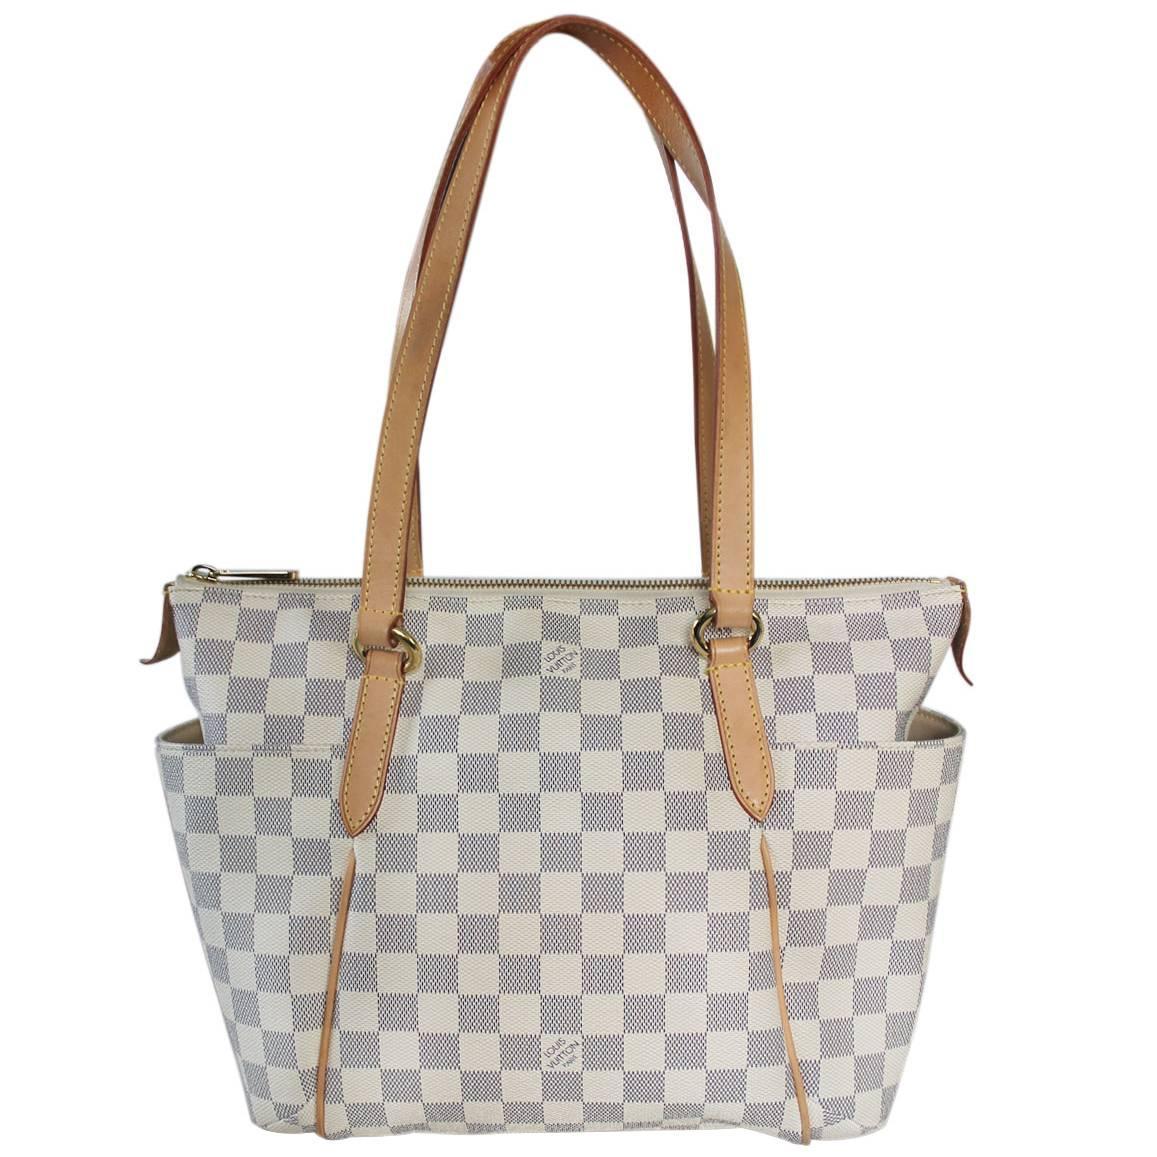 Louis Vuitton Totally Damier Azur Handbag in Dust bag For Sale at 1stdibs